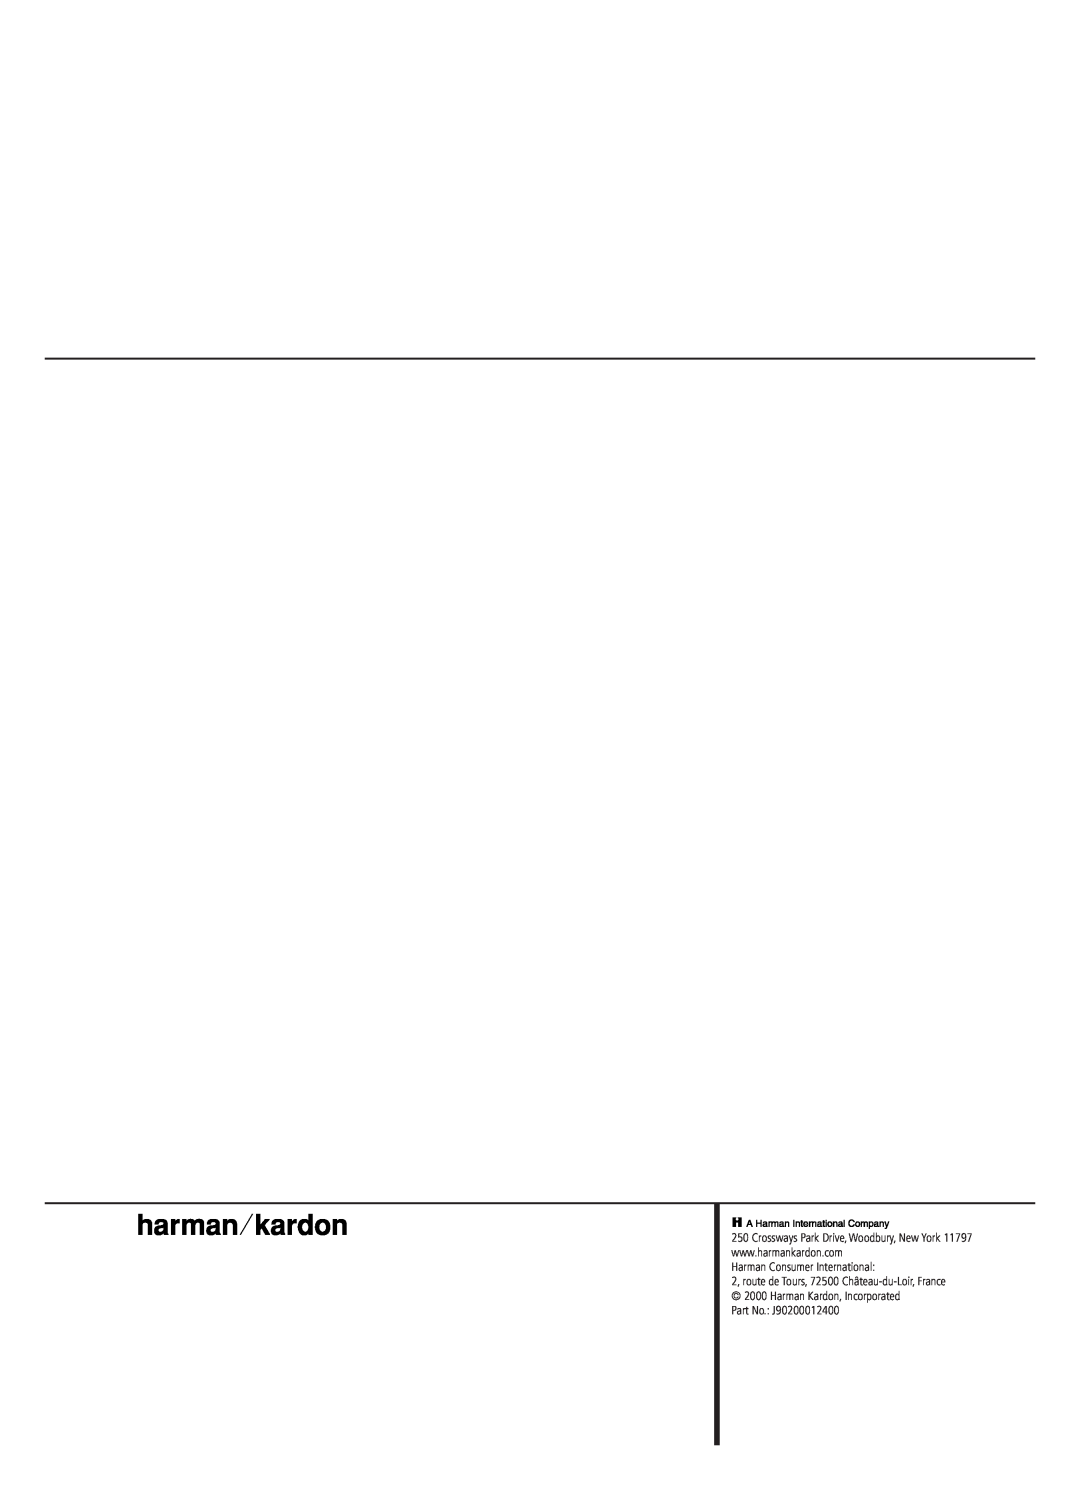 Harman-Kardon AVR 2000 owner manual Harman Consumer International, Part No. J90200012400 